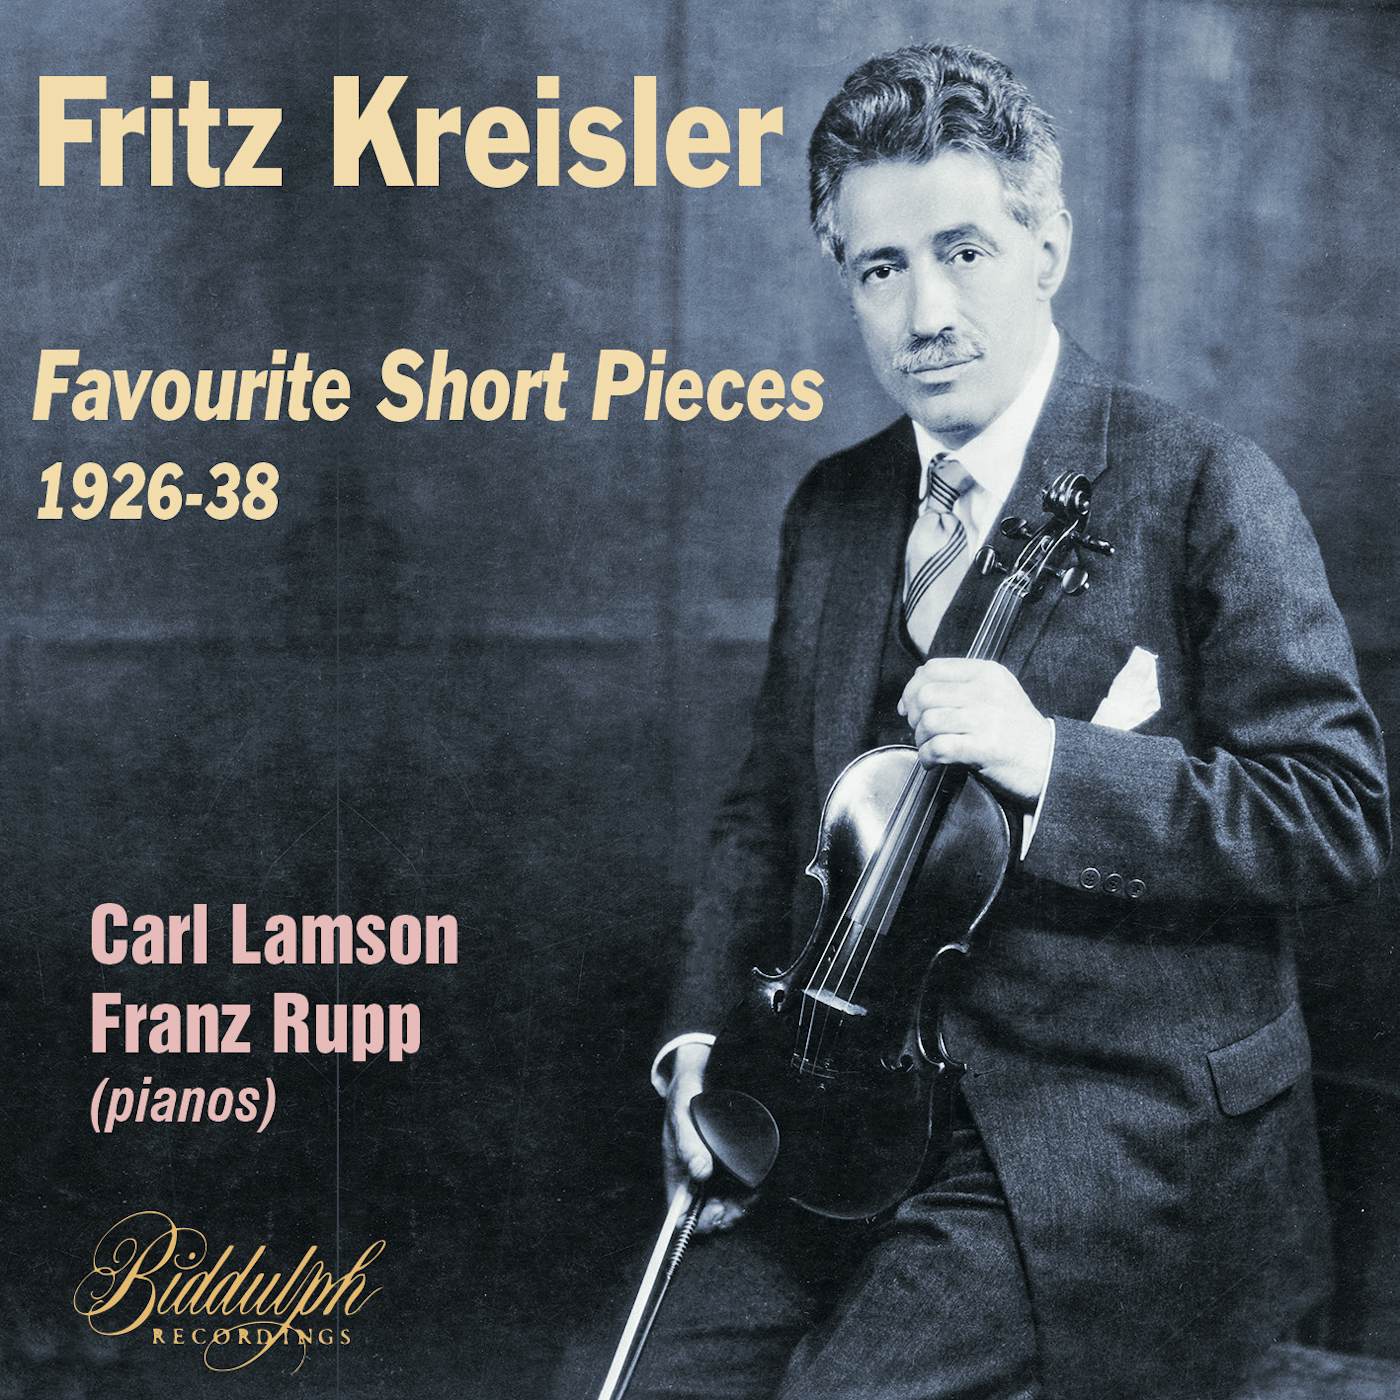 FRITZ KREISLER: FAVOURITE SHORT PIECES 1926-38 CD